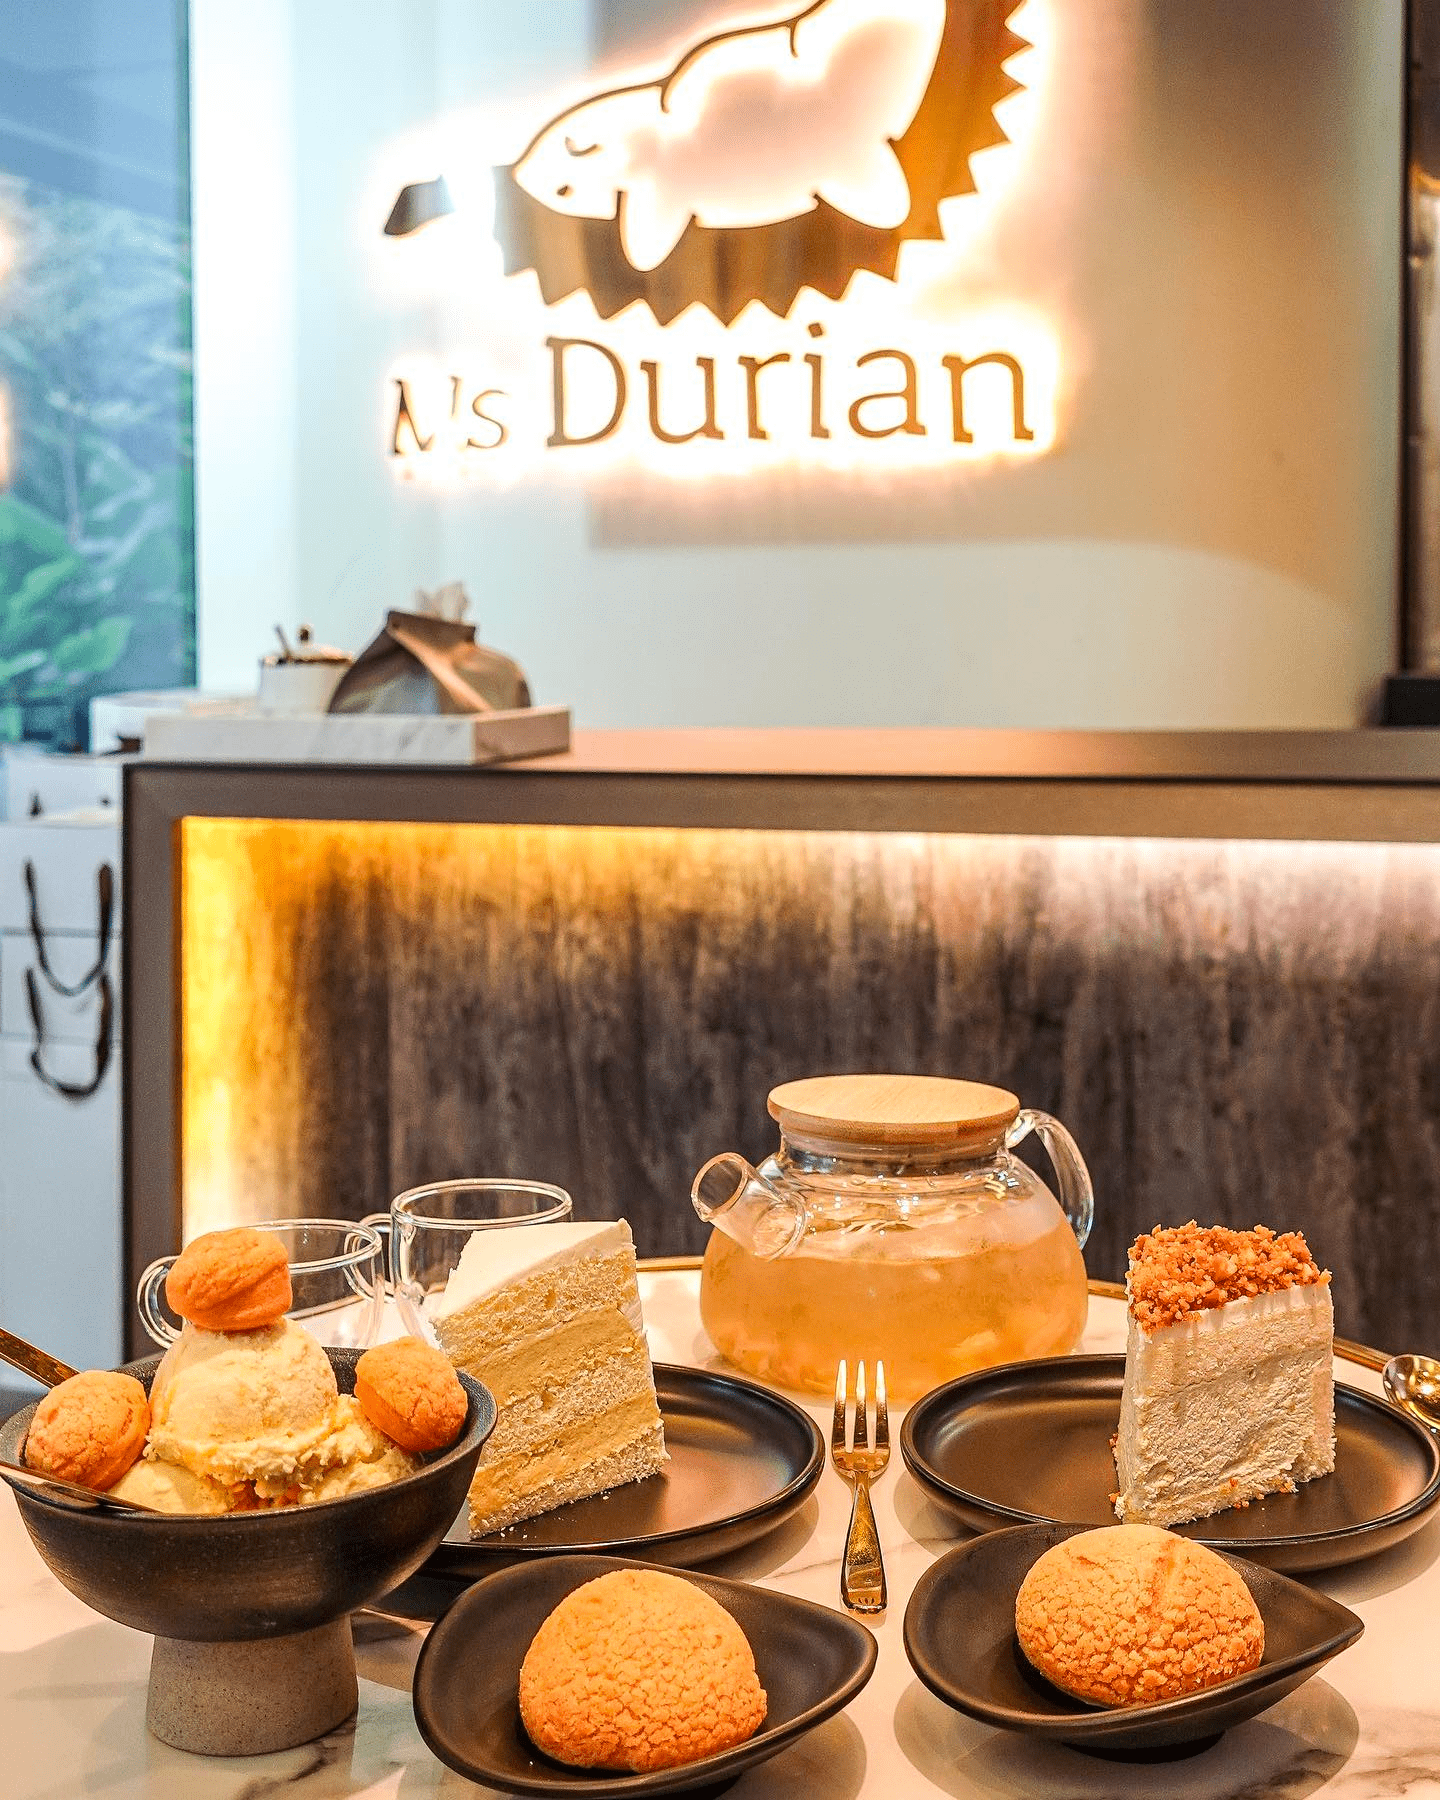 Ms Durian - desserts